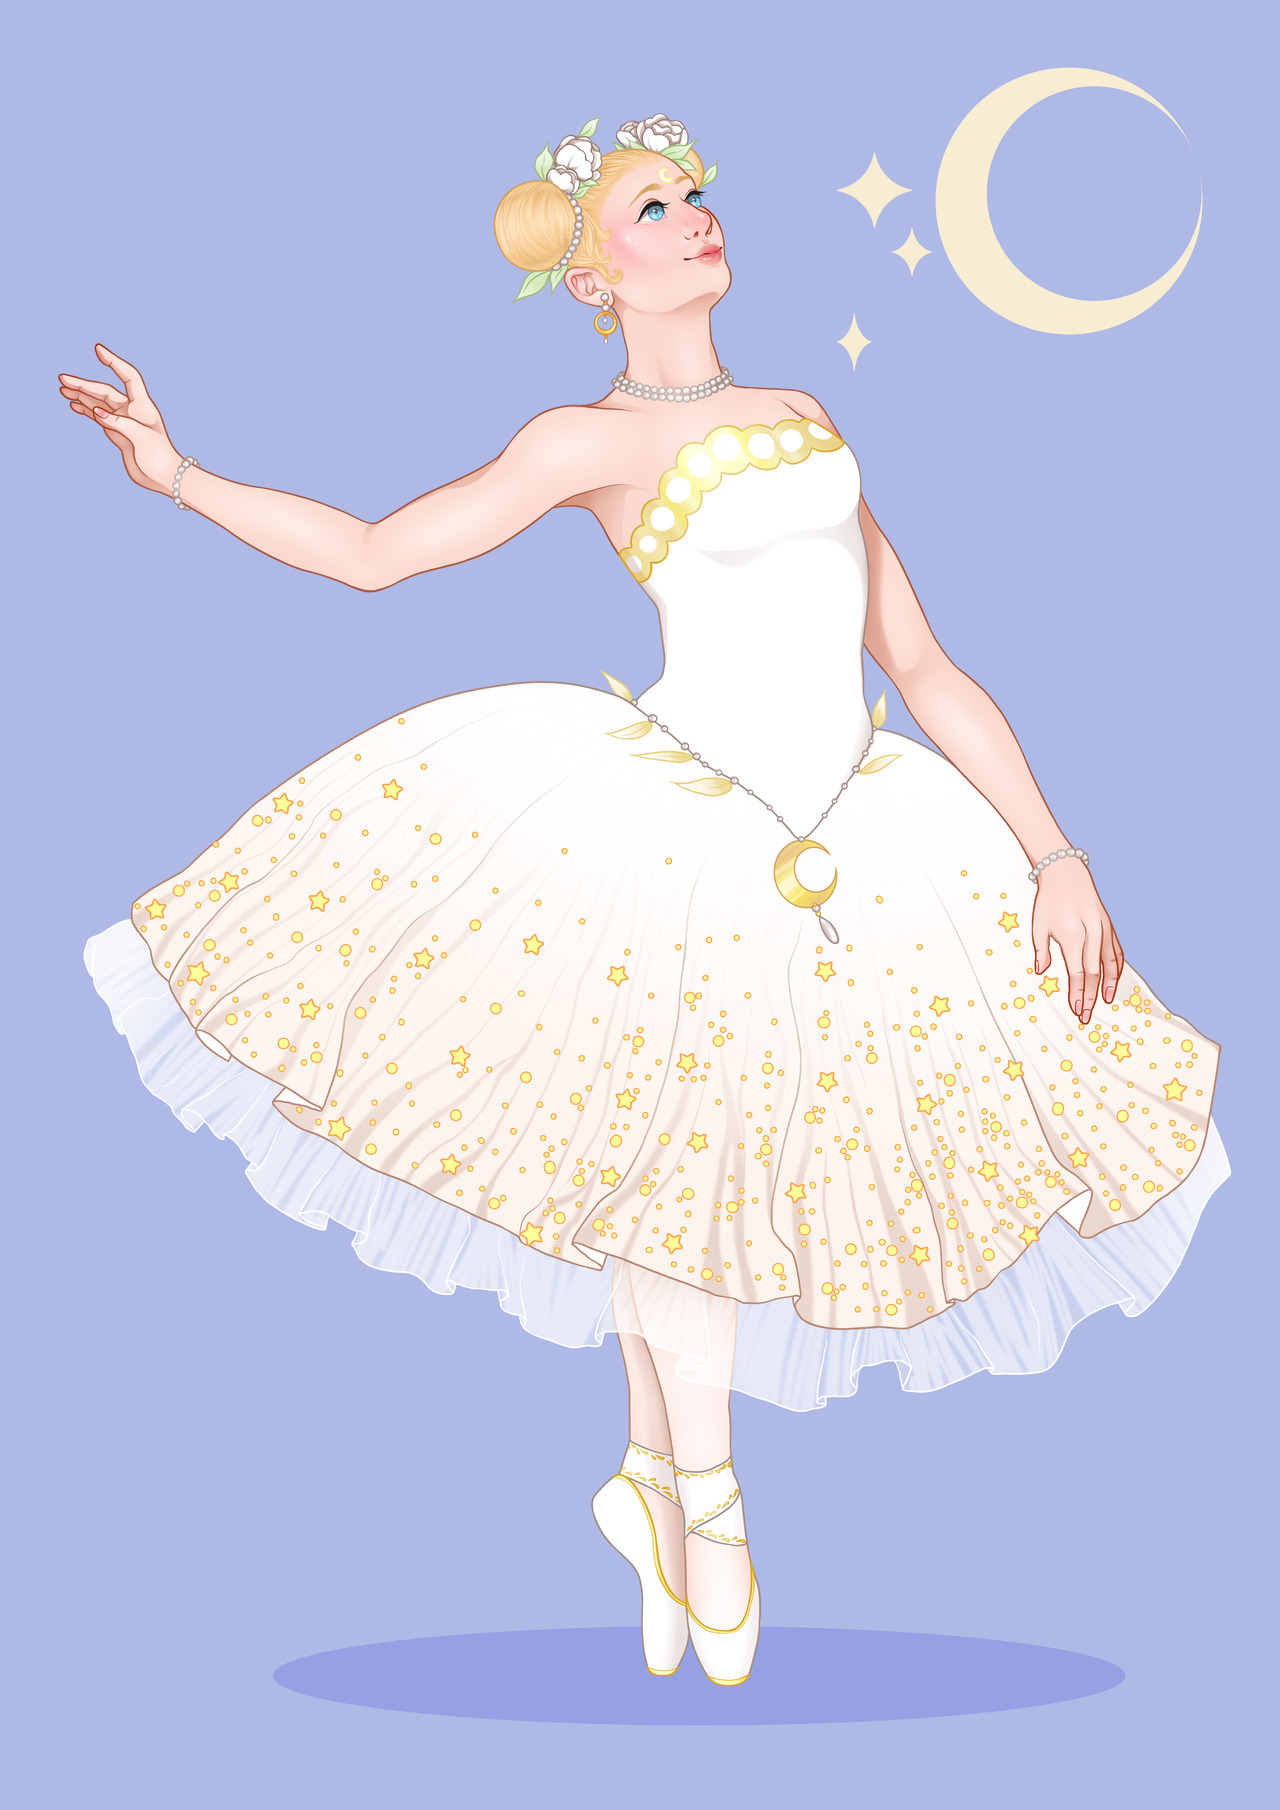 Sailor moon ballerina au: 2019 version! | follow for art